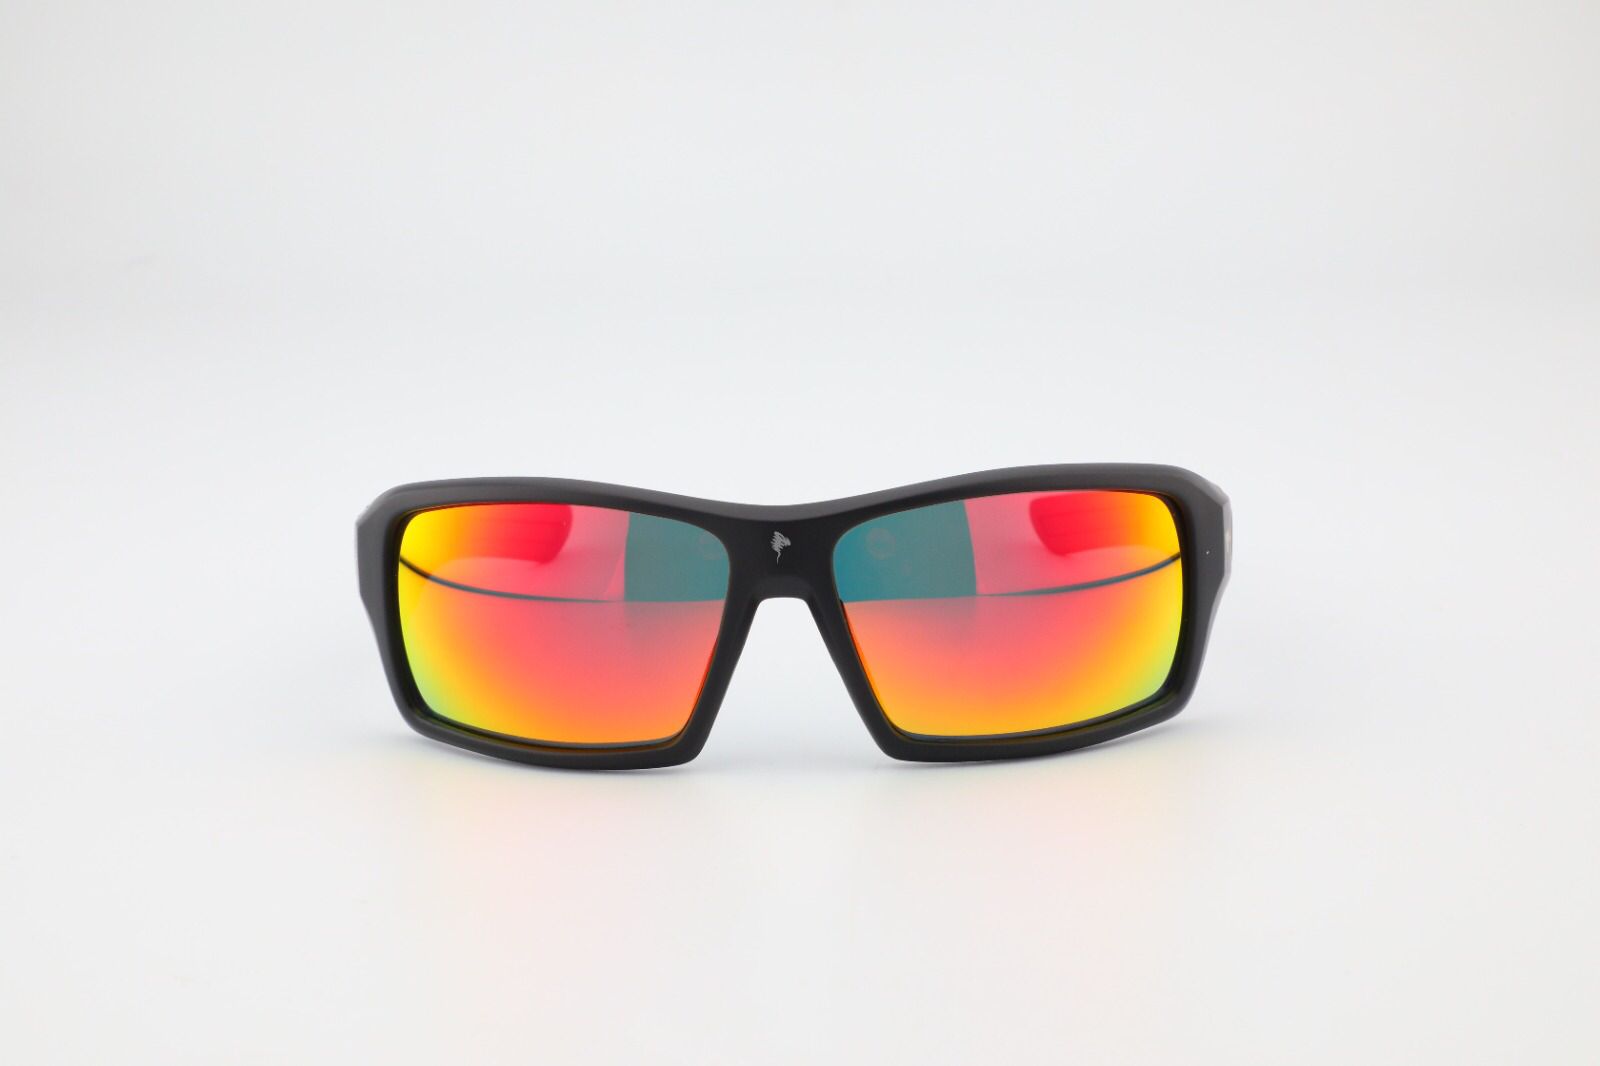 sports sunglasses online store - eye wear frames - sports sunglasses frame